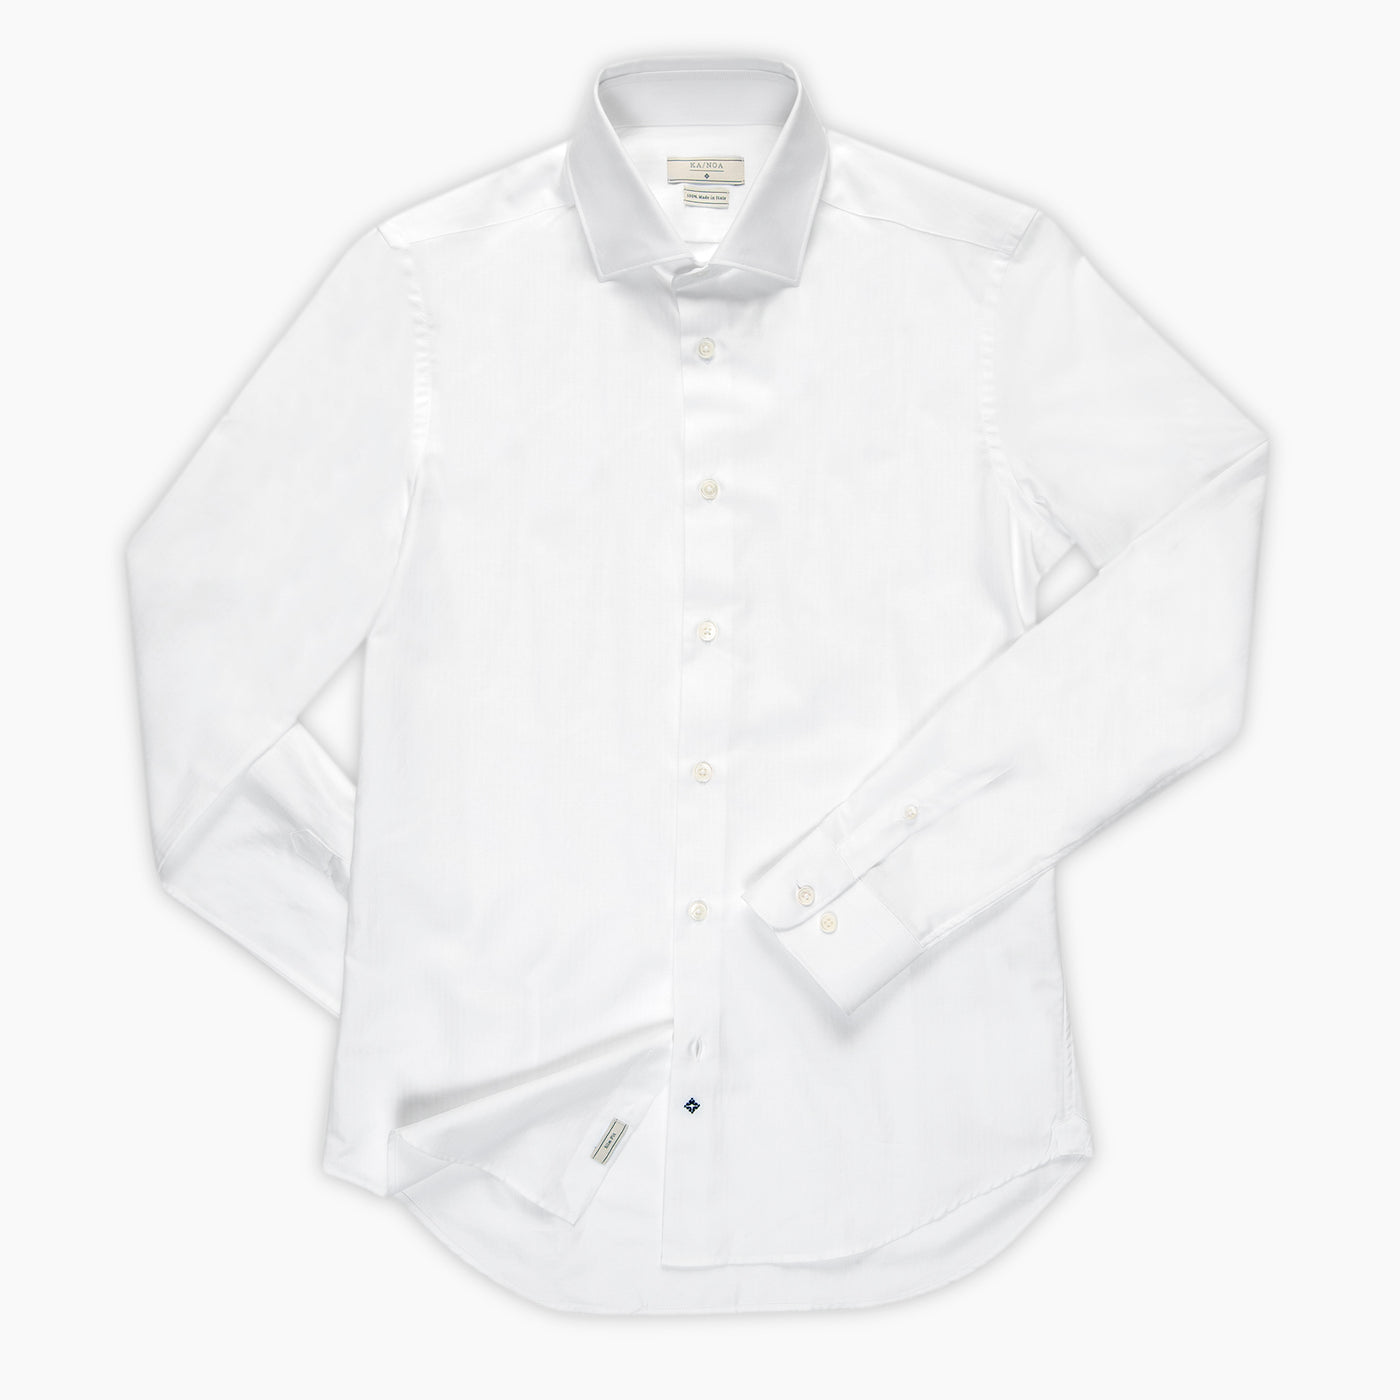 Clamenc shirt in Elegant Herringbone Cotton